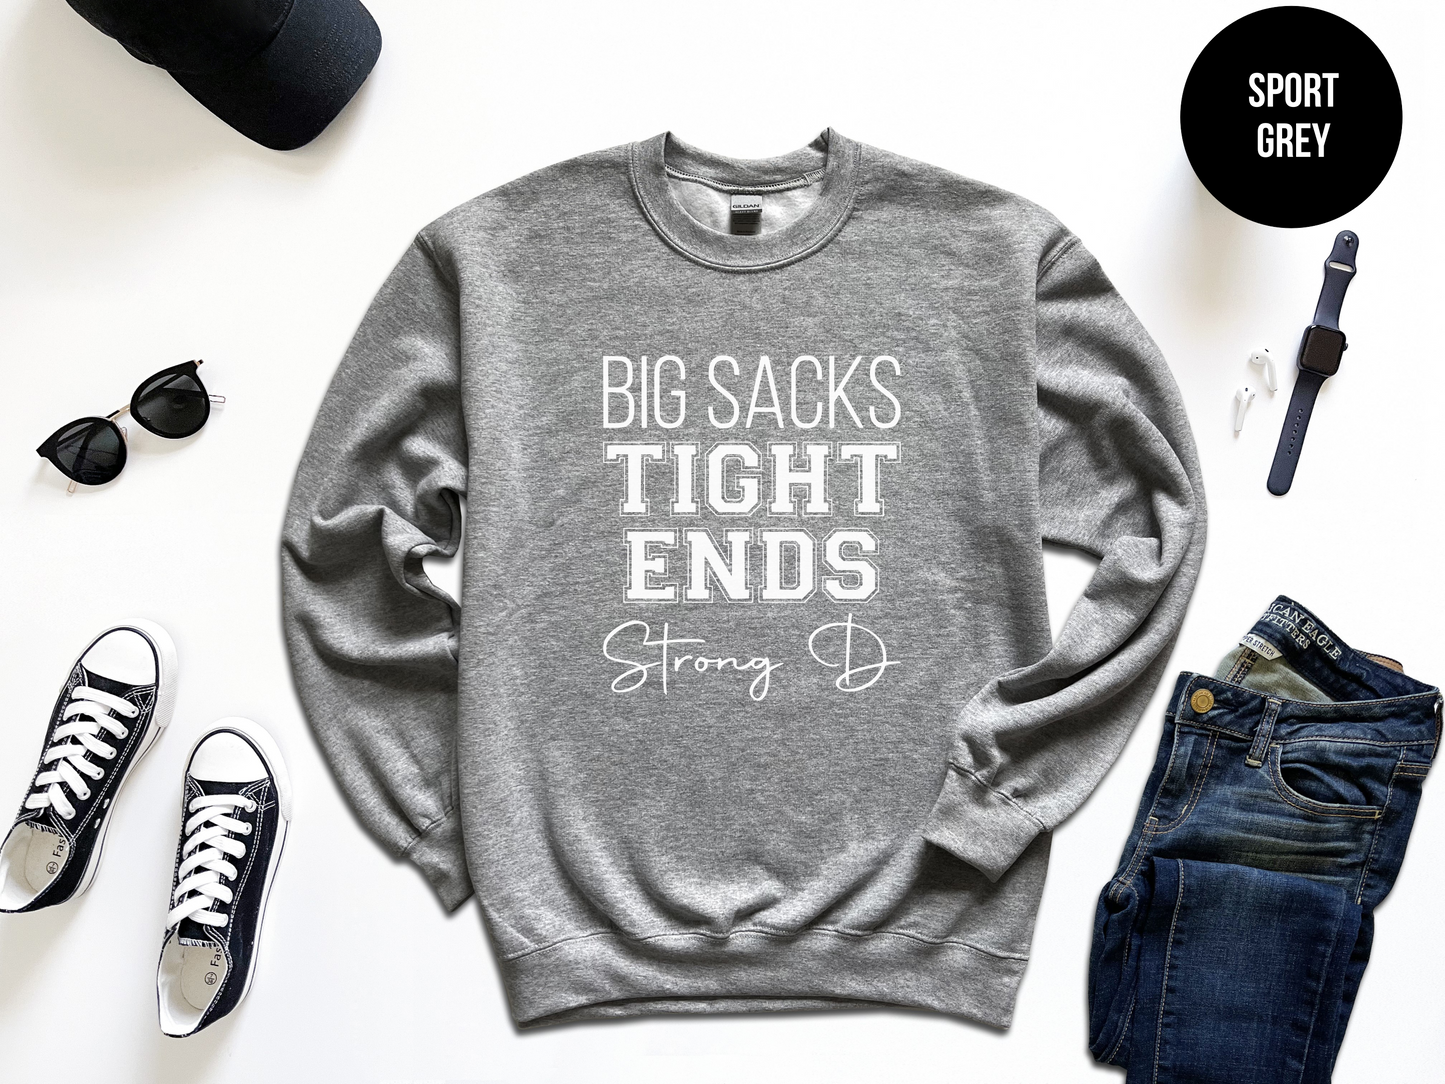 Big Sacks, Tight Ends, Strong D Sweatshirt